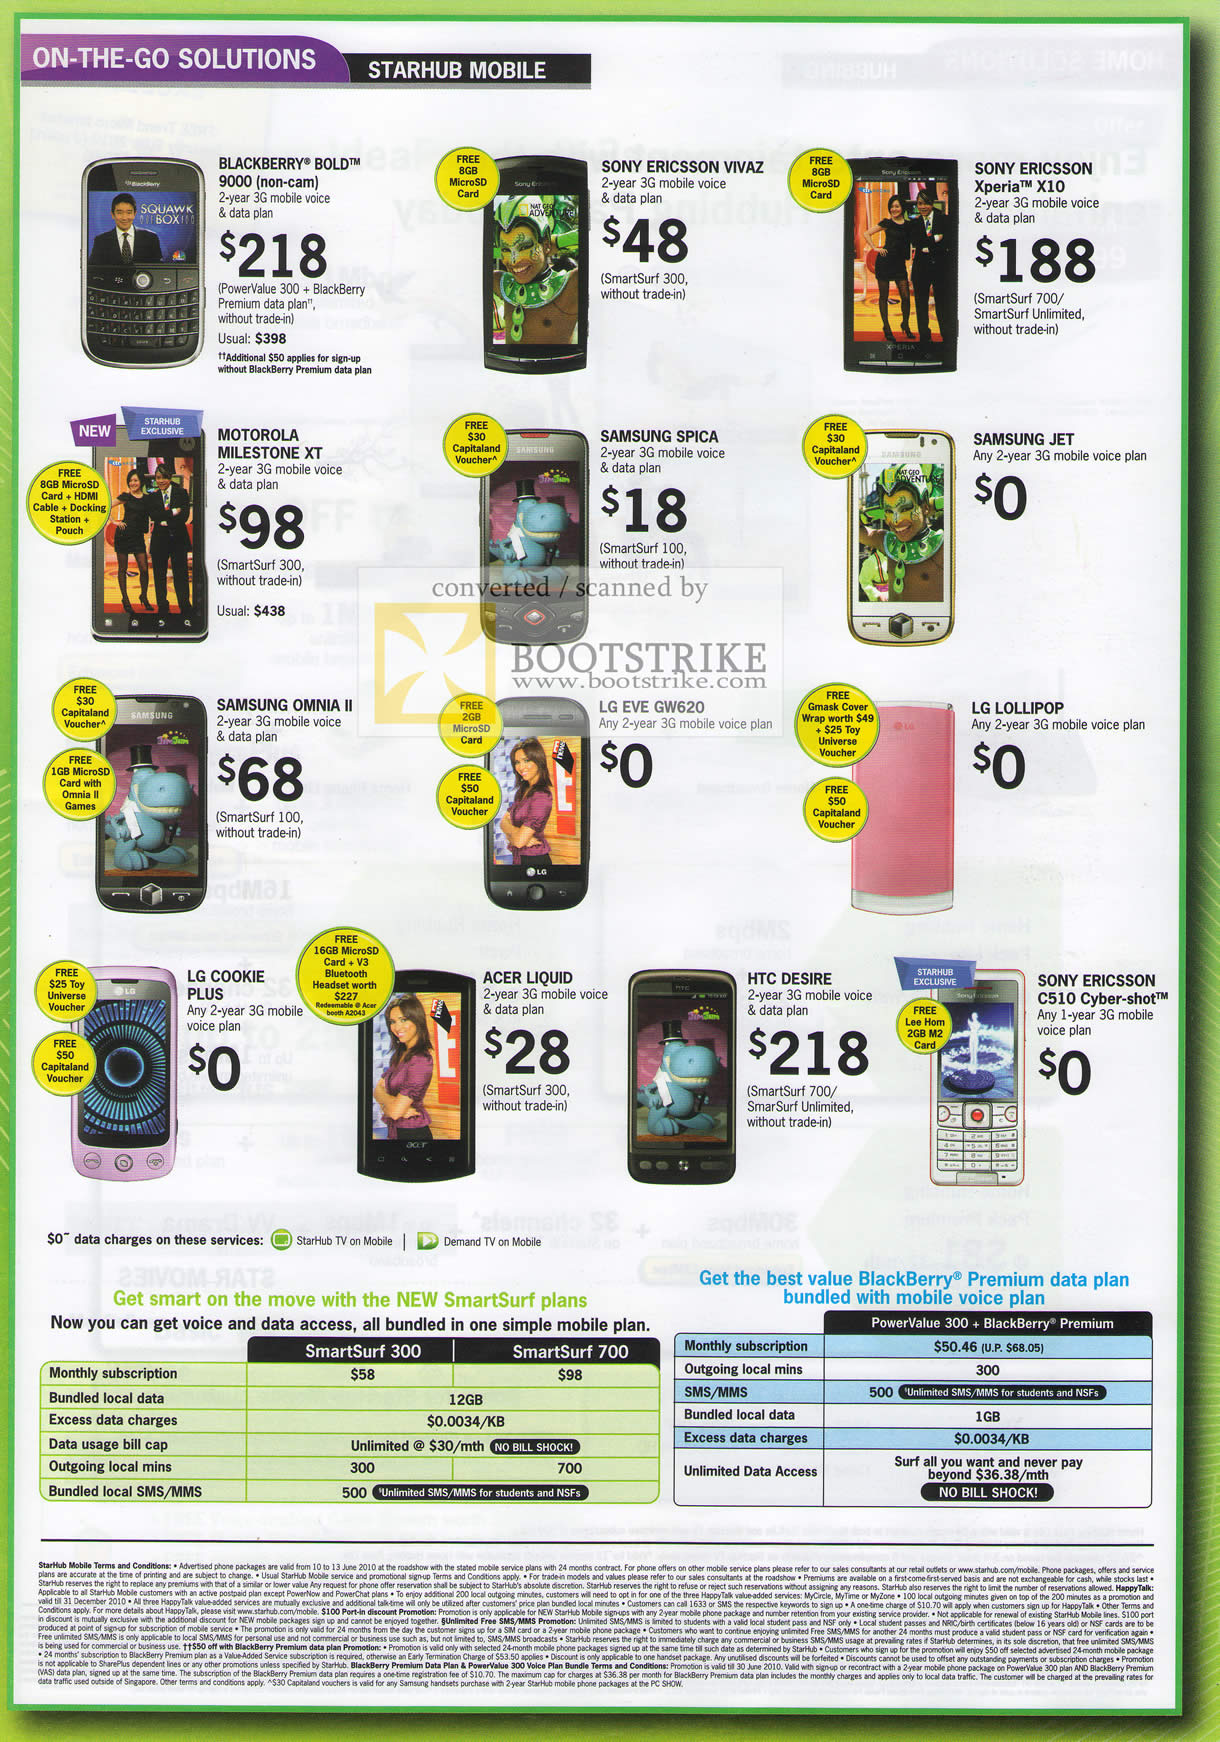 PC Show 2010 price list image brochure of Starhub Mobile Phones BlackBerry Sony Ericsson Motorola Samsung LG Acer HTC Plans SmartSurf